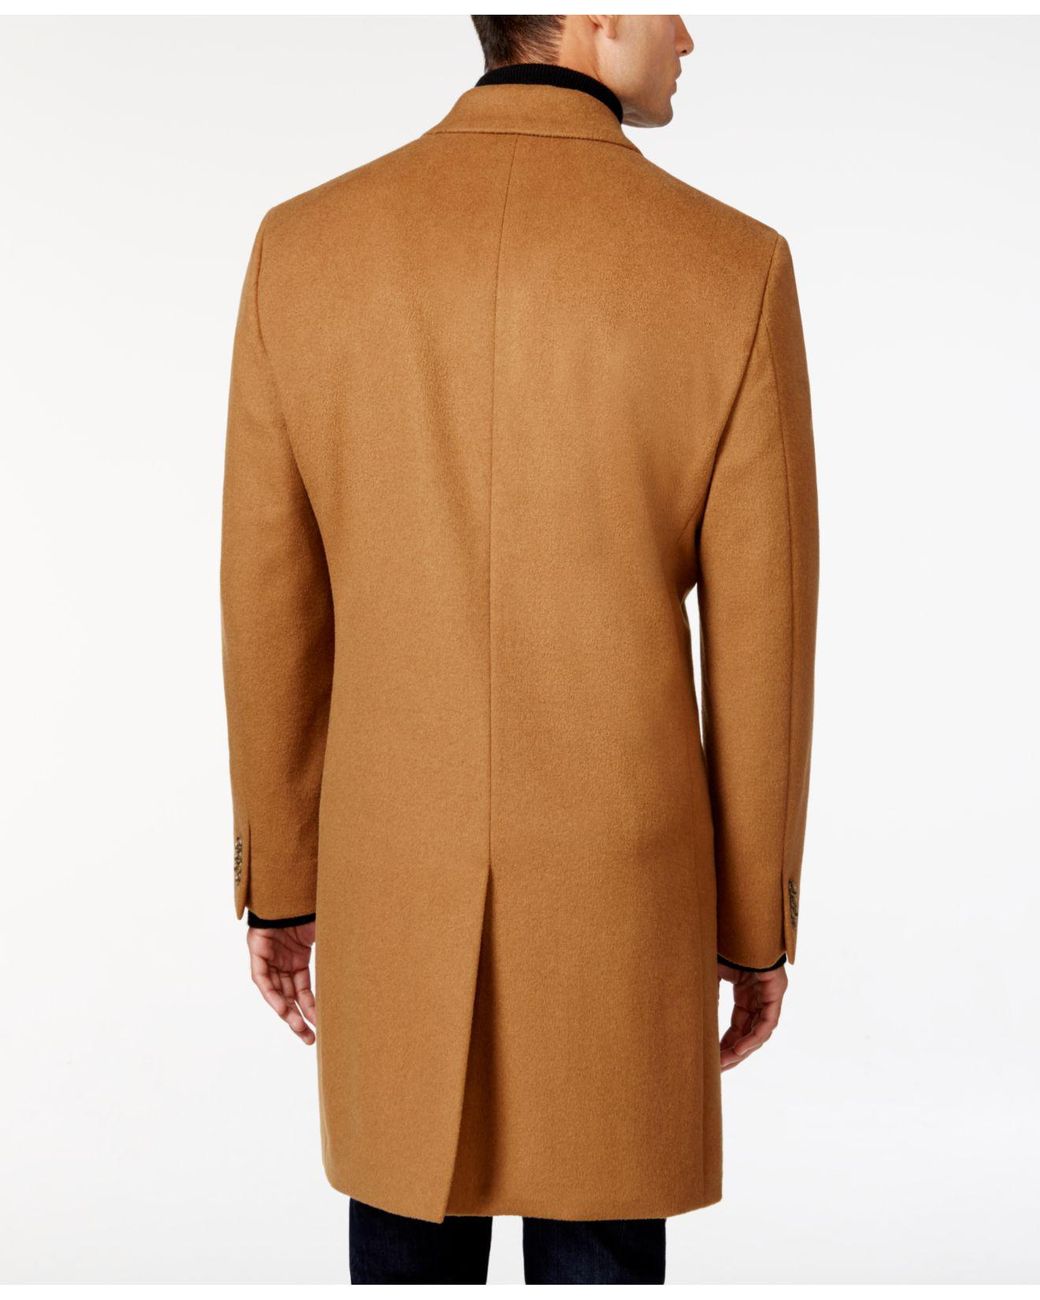 Kenneth Cole Reaction Raburn Wool-Blend Slim-Fit Coat in Camel 